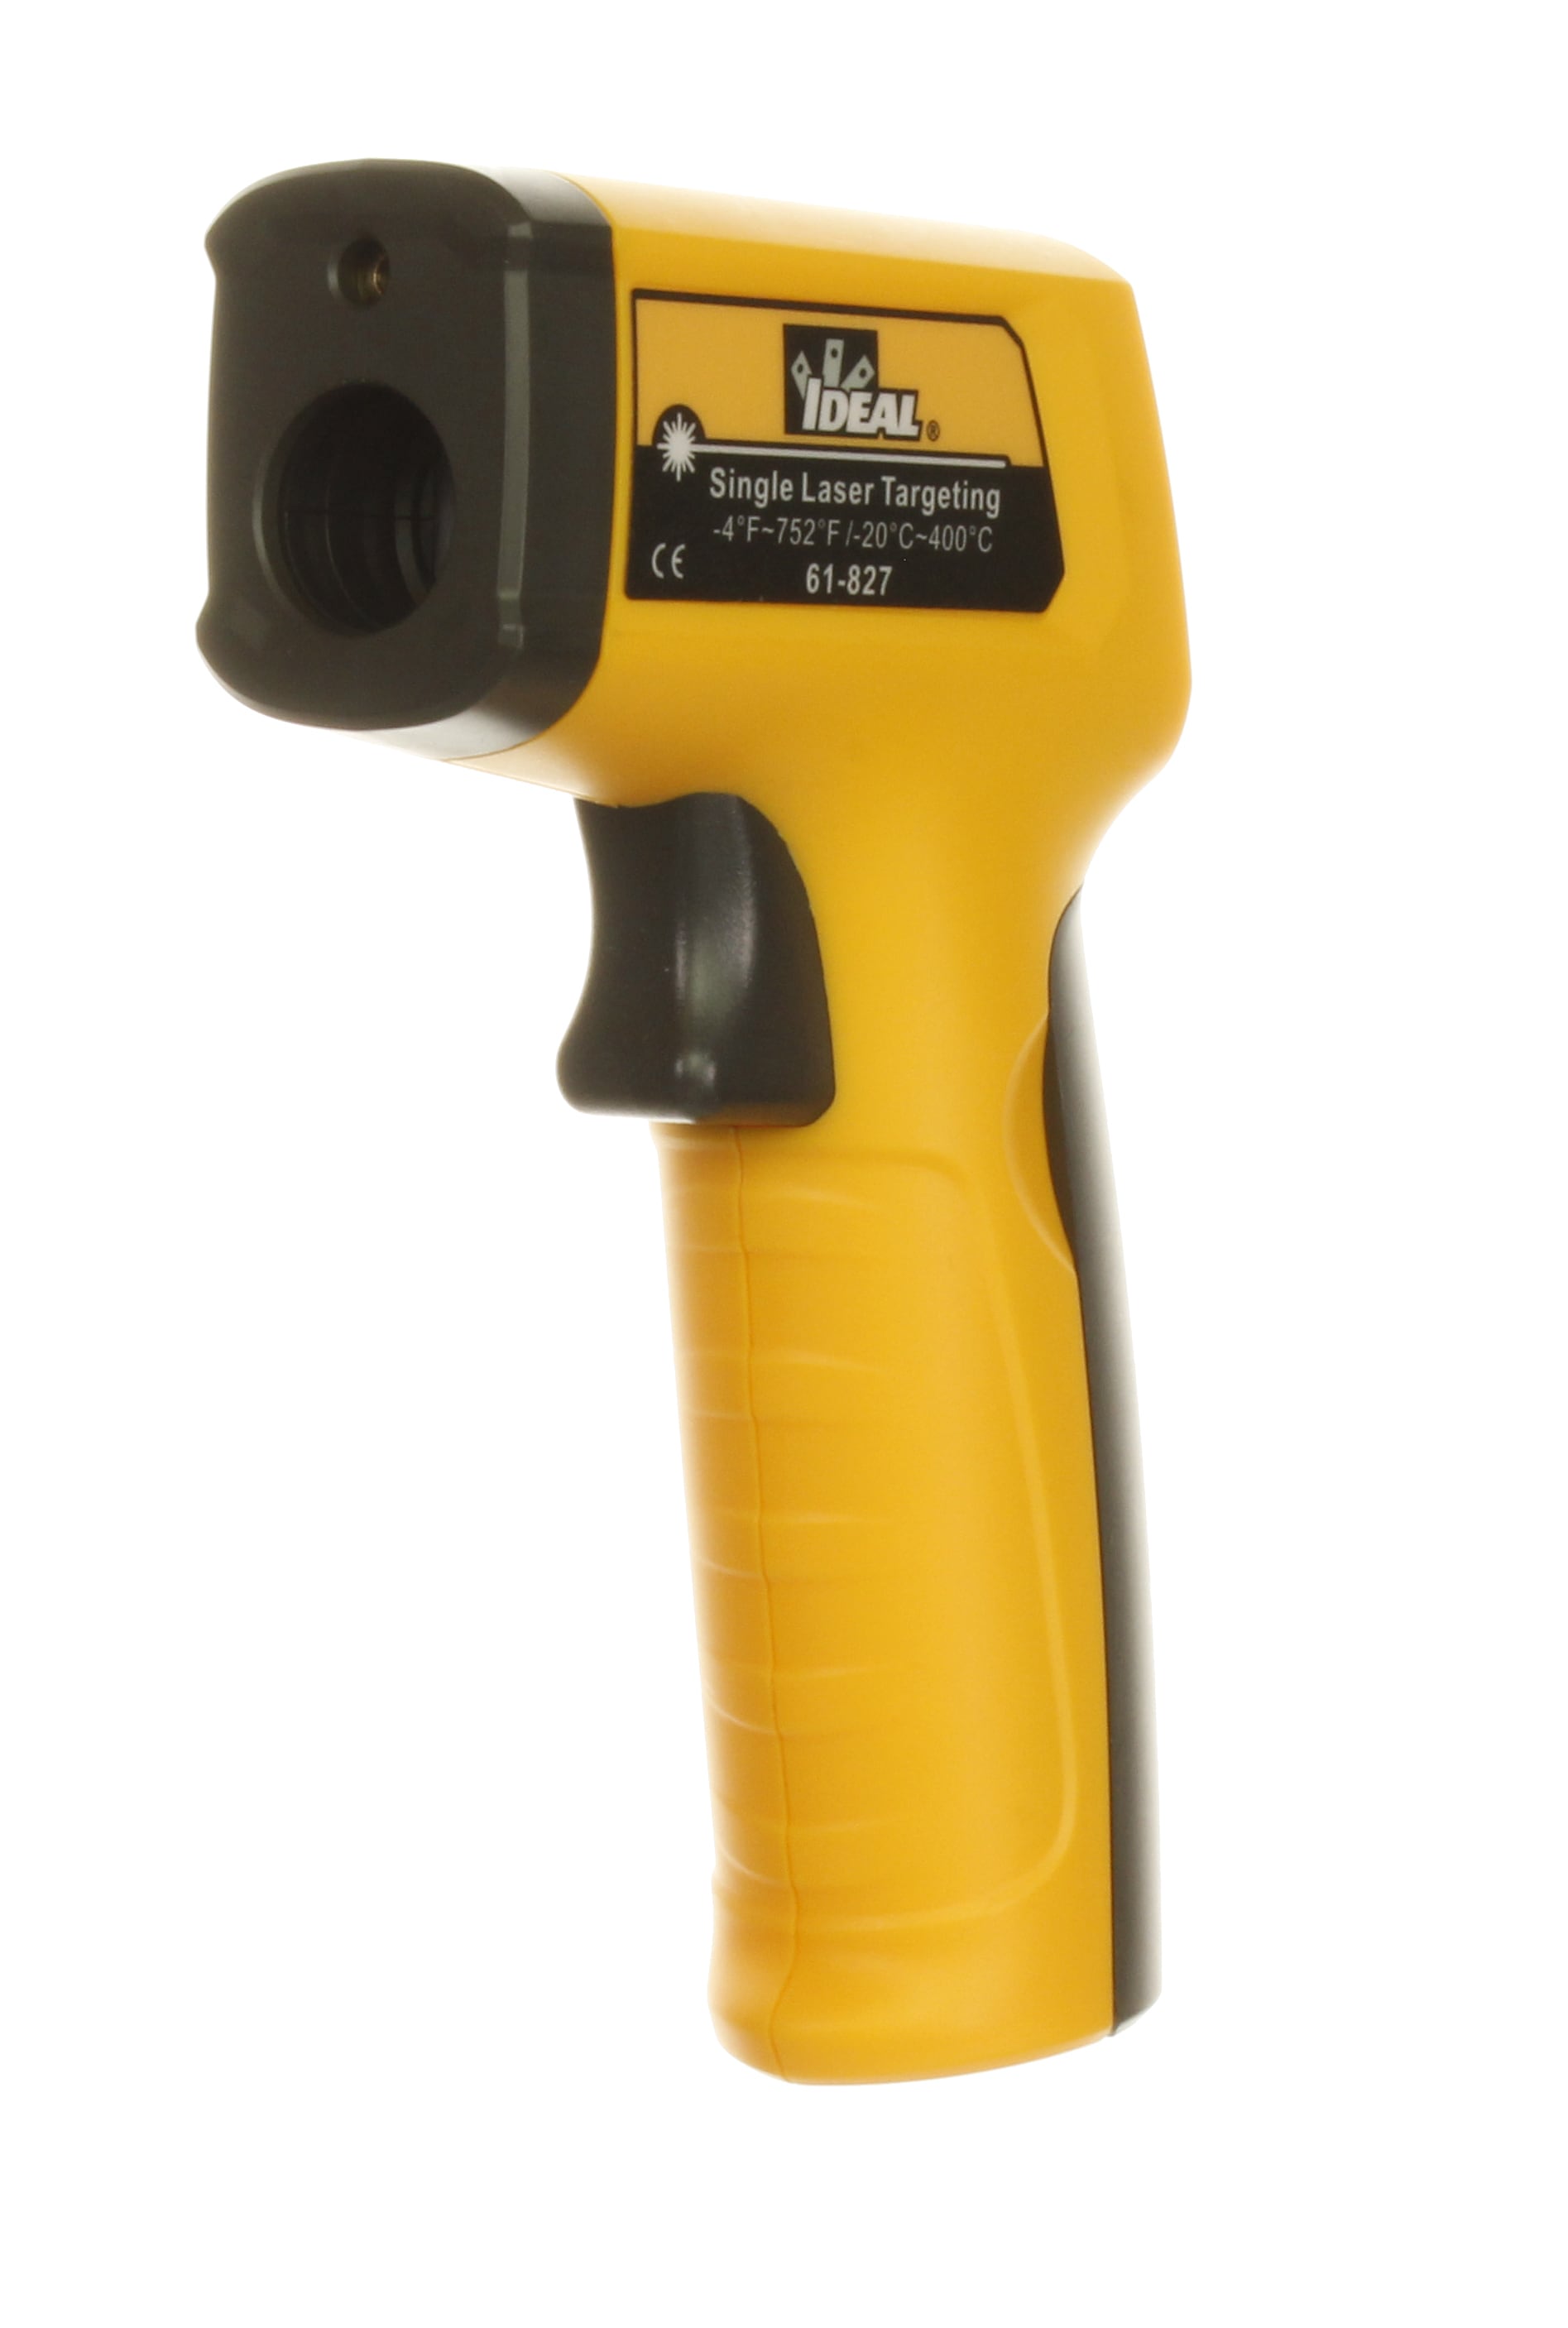 SALTNLIGHT Digital Infrared Thermometer Gun Instant Read Infrared